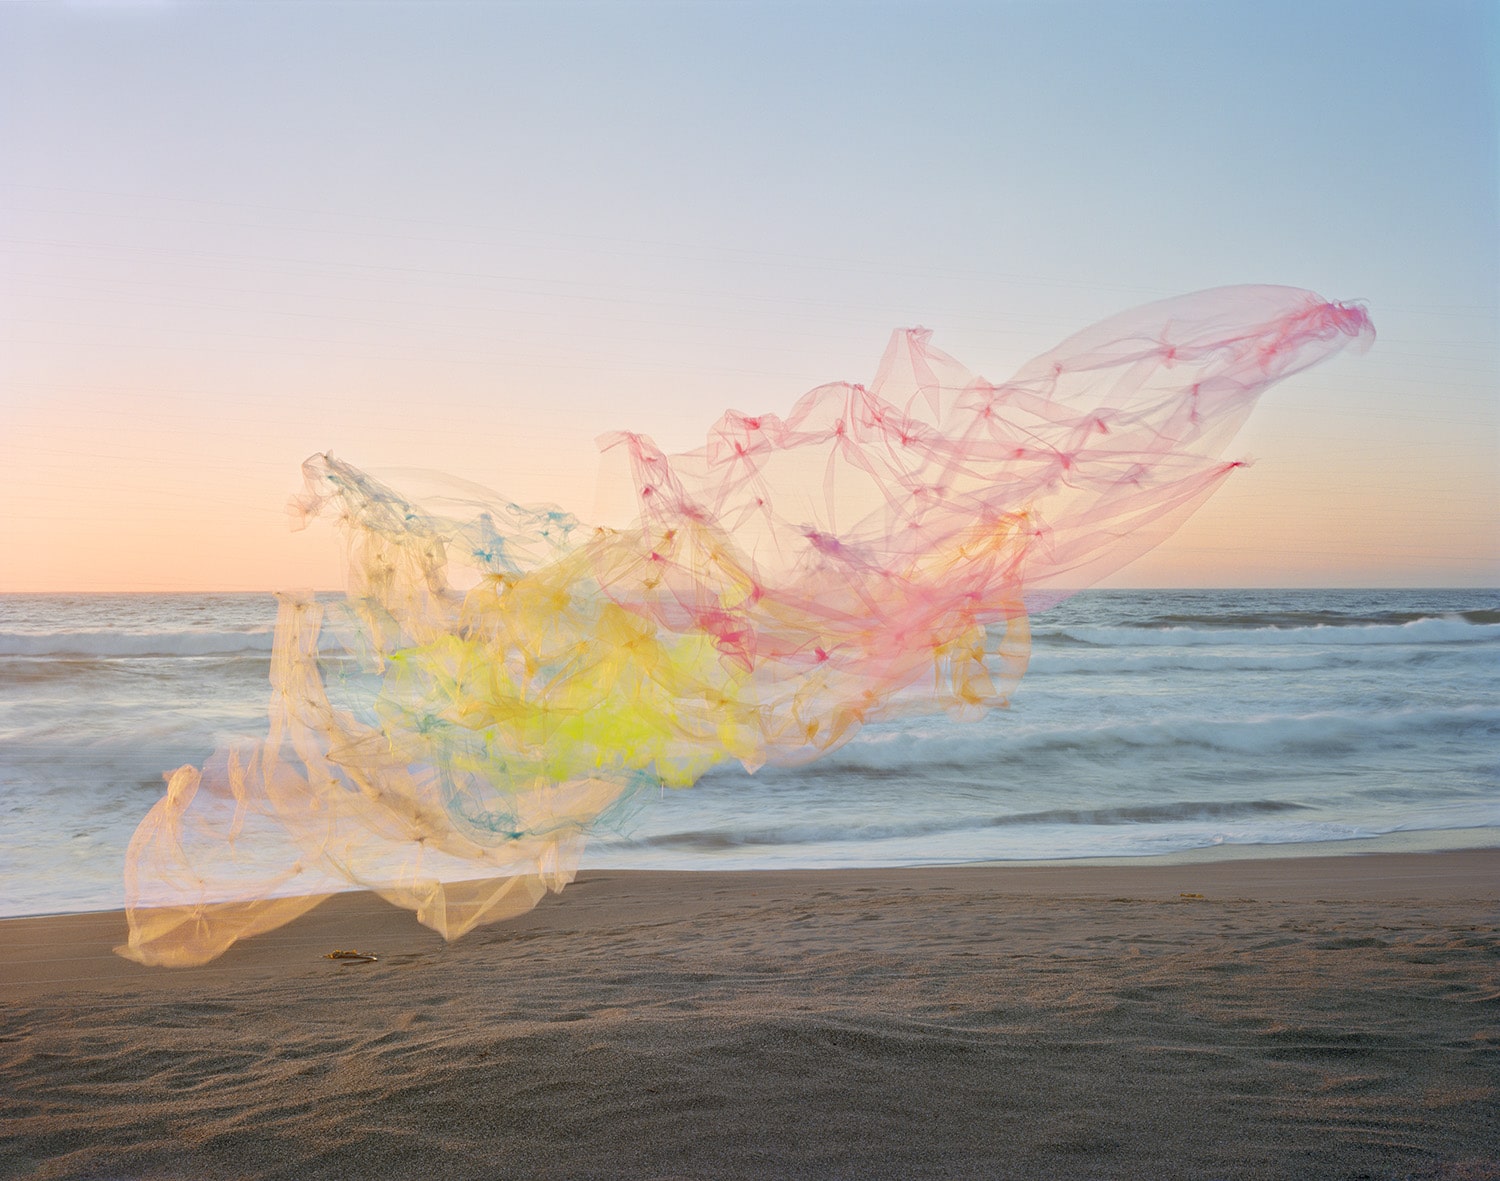 Fotos de tul flotando junto al mar por Thomas Jackson